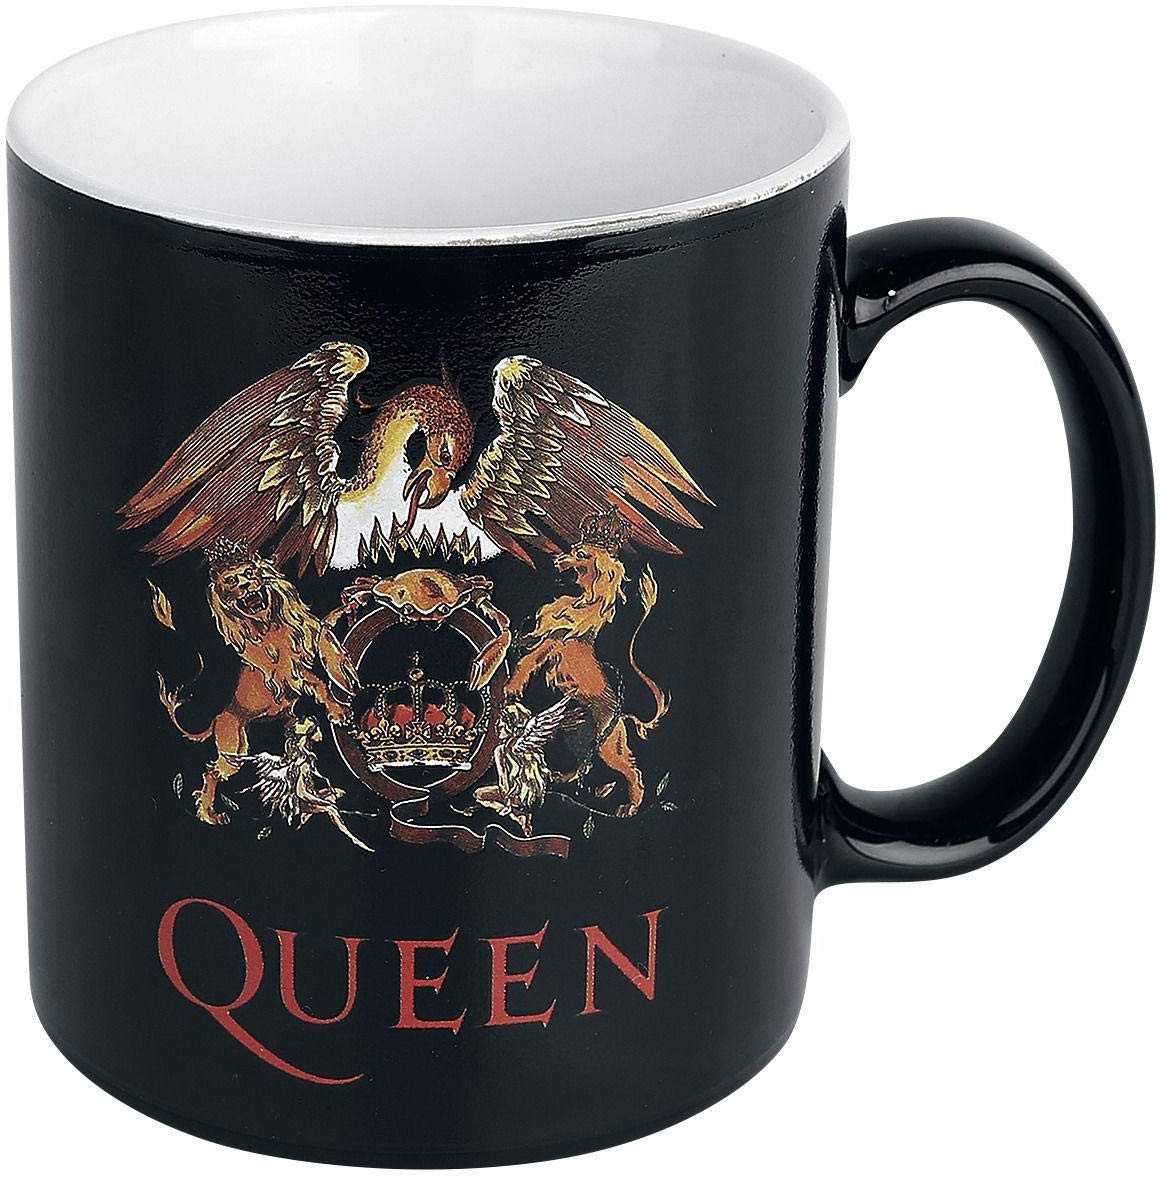 Mug Queen Crest Heat Change Mug